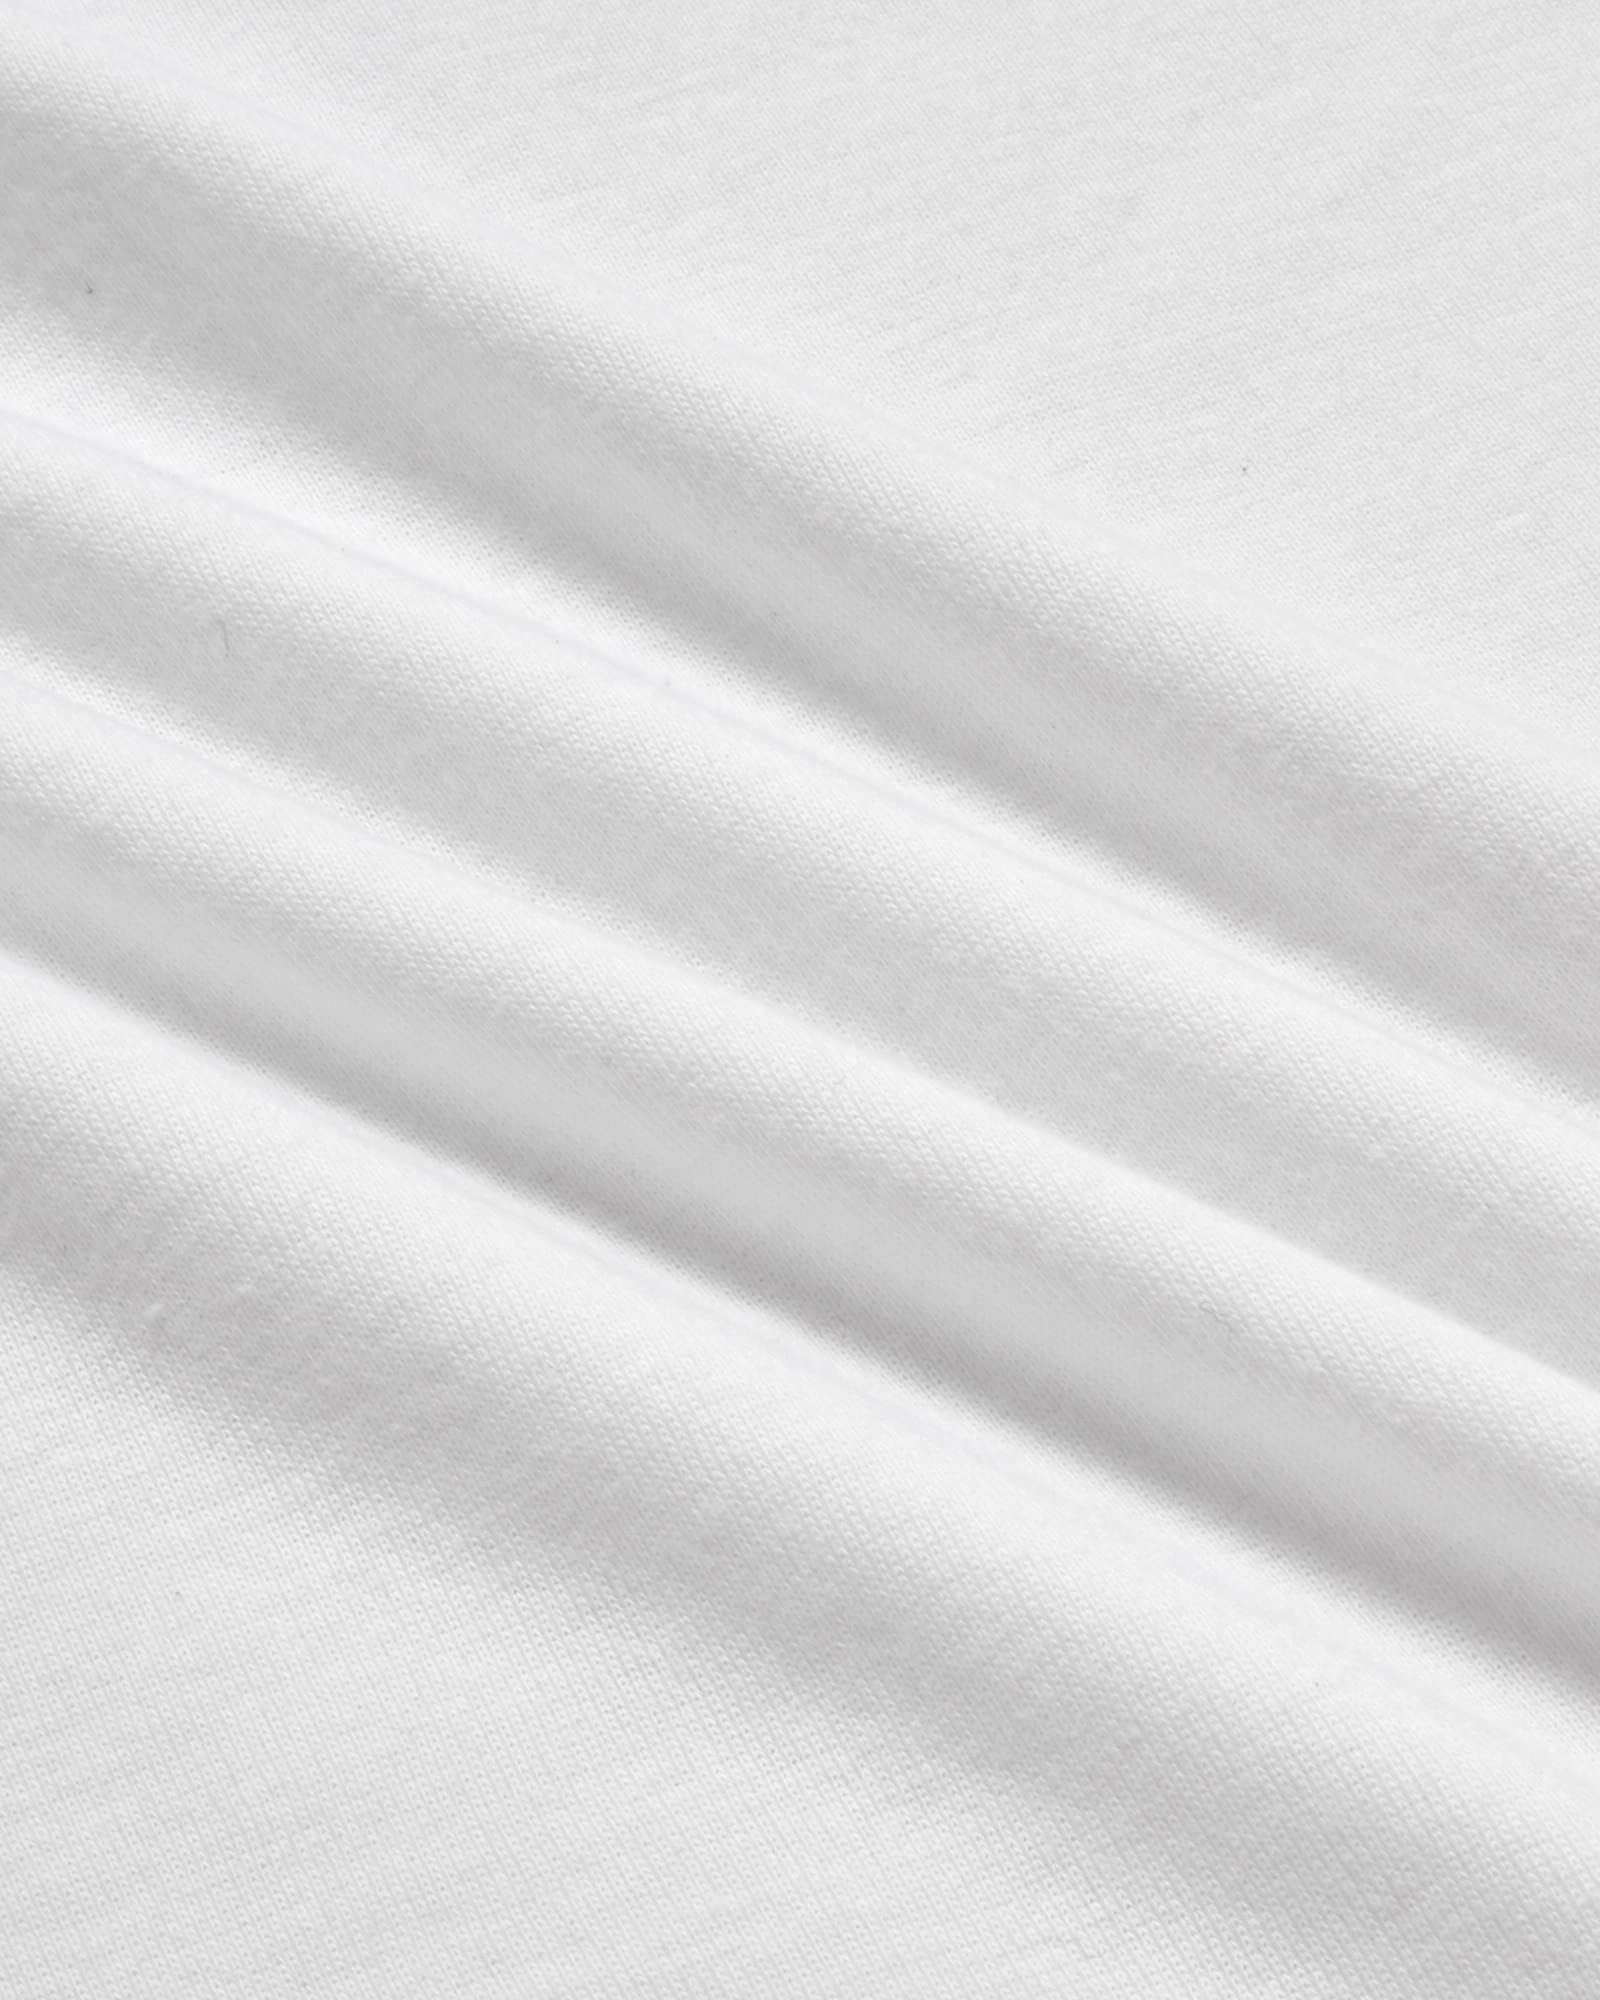 Reebok Girls' Undershirts – Soft Breathable A-Shirt Tank Top (3 Pack)